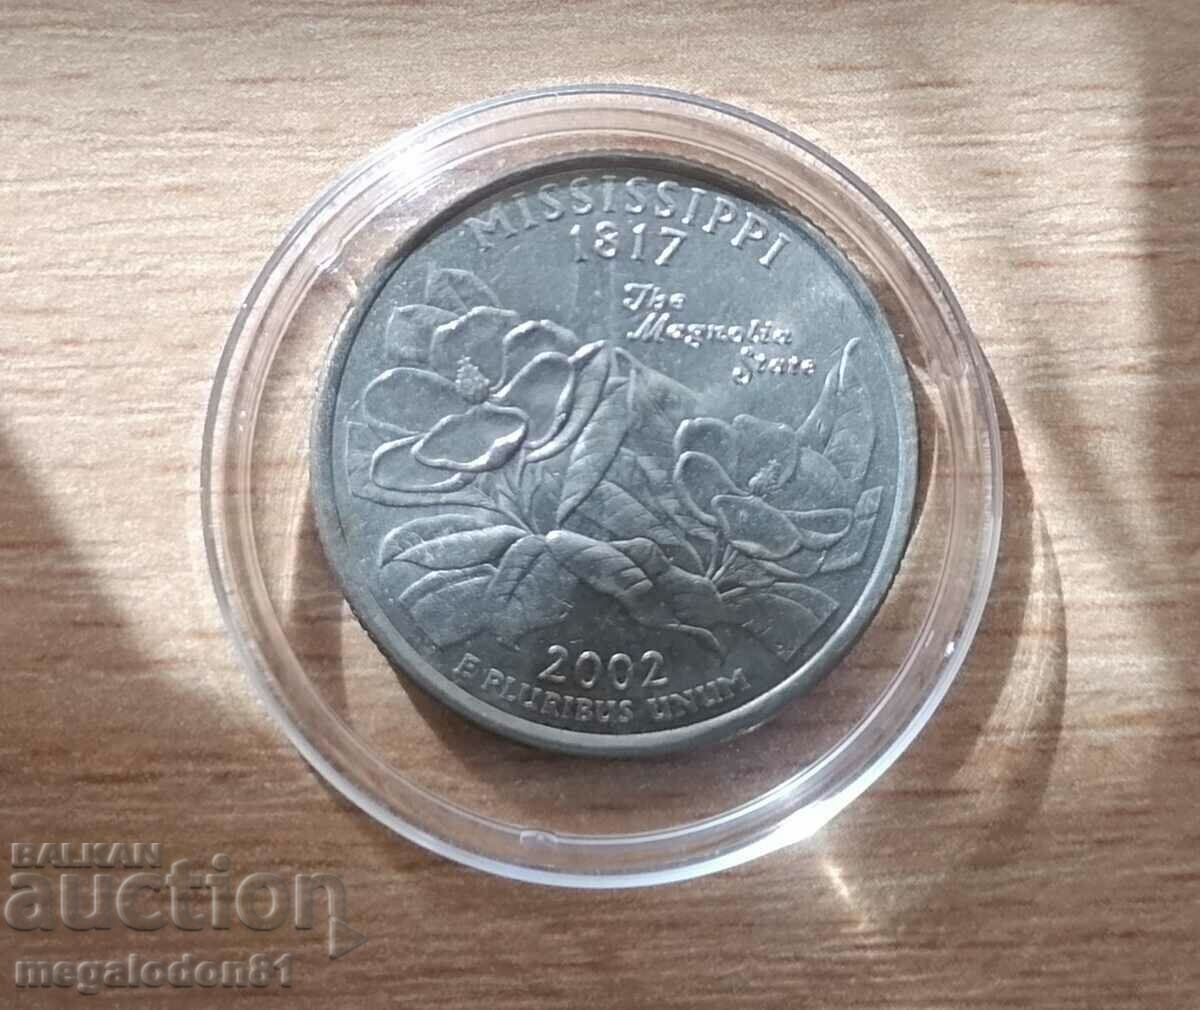 USA - 25 cents 2002